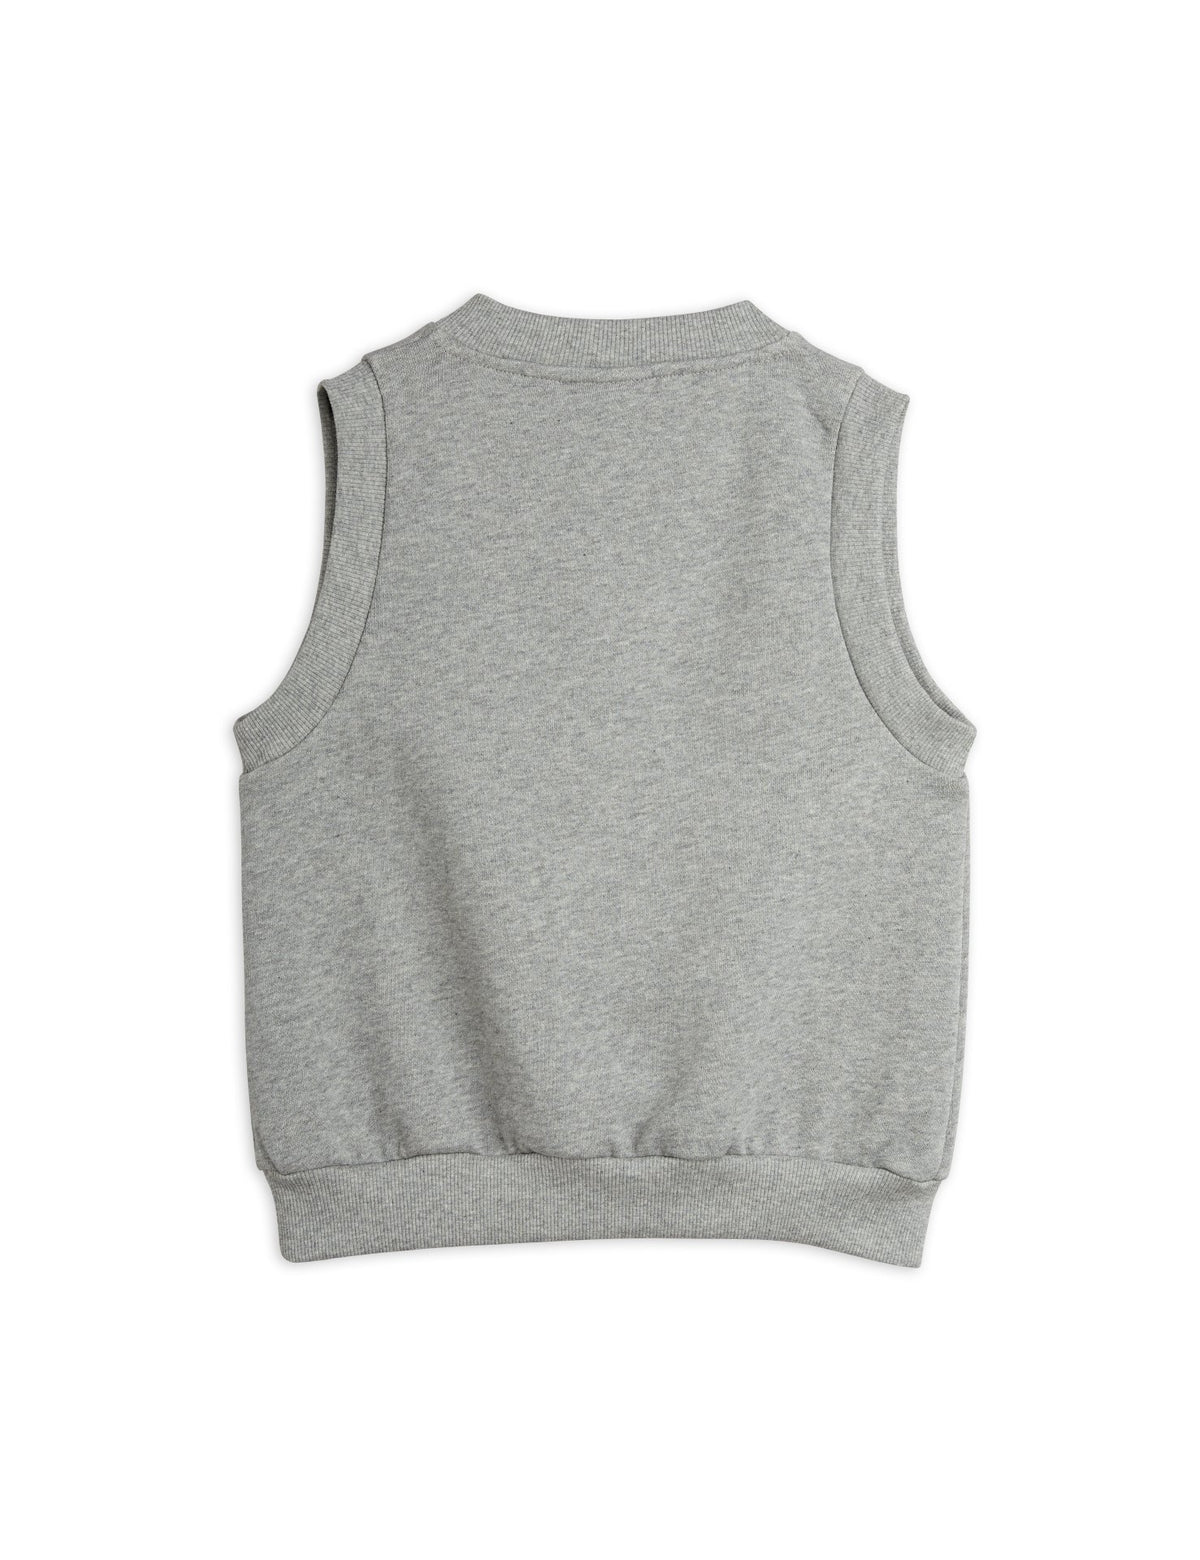 mini rodini feather patch sweater vest - grey melange